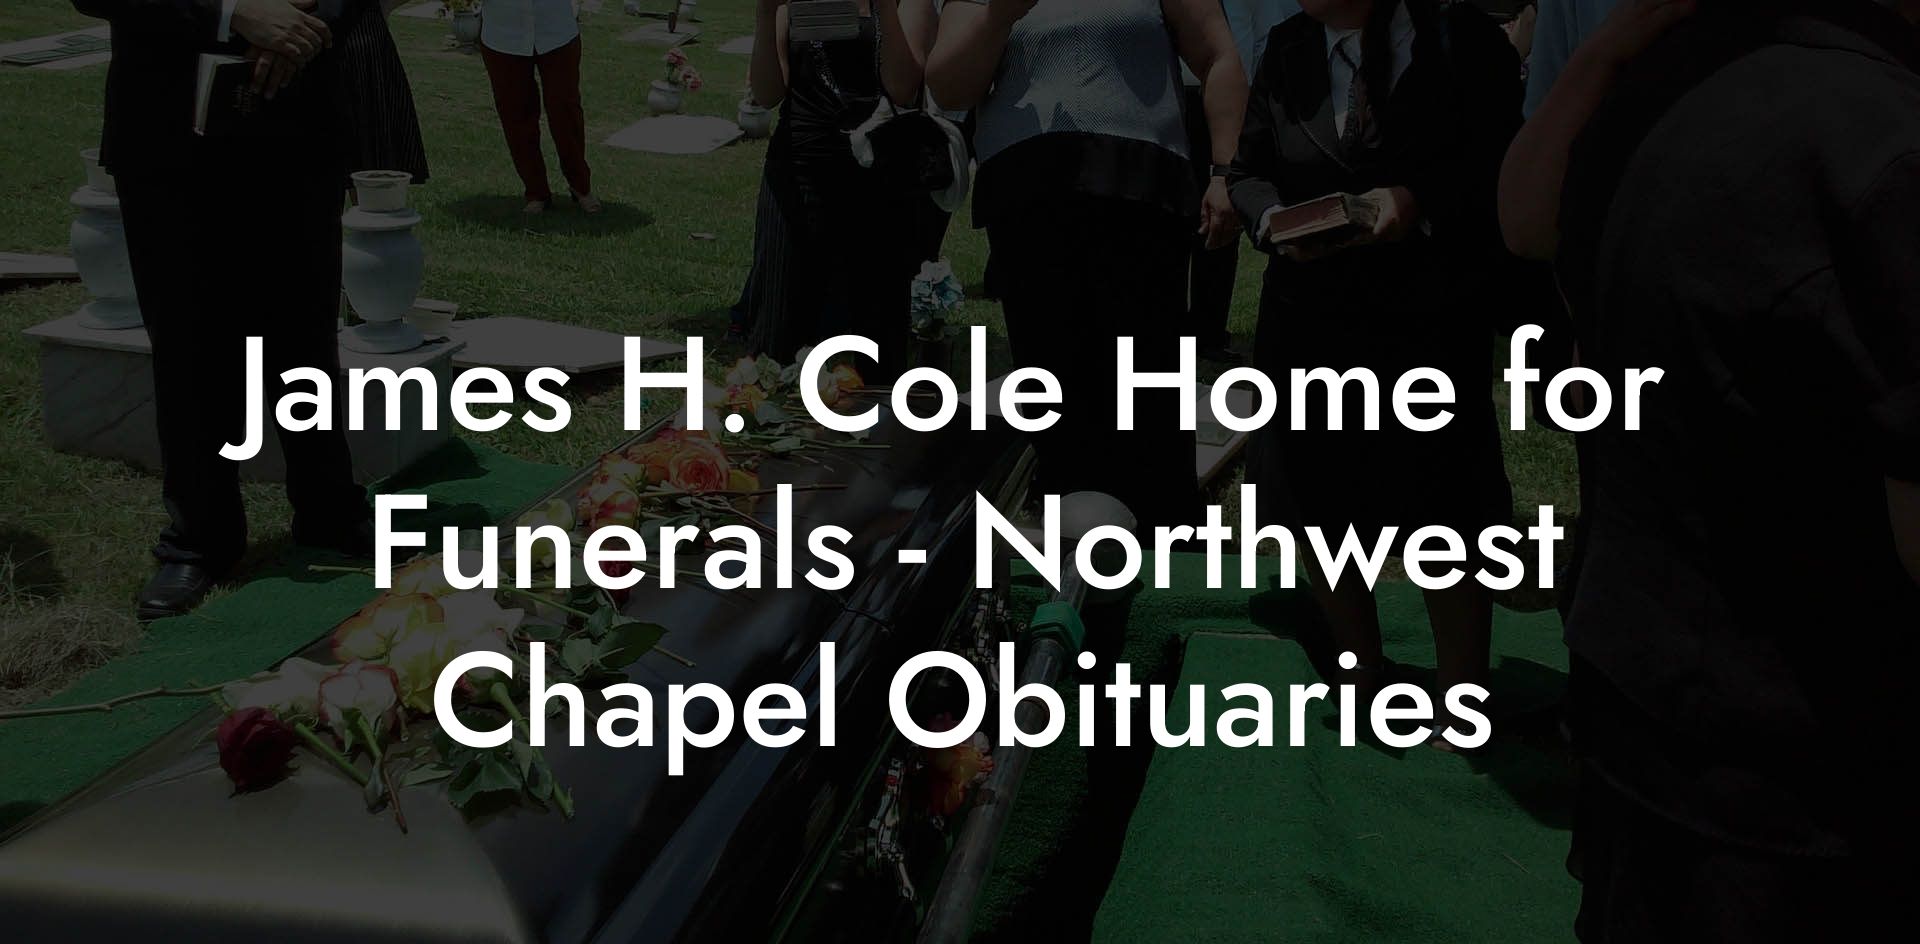 James H. Cole Home for Funerals - Northwest Chapel Obituaries